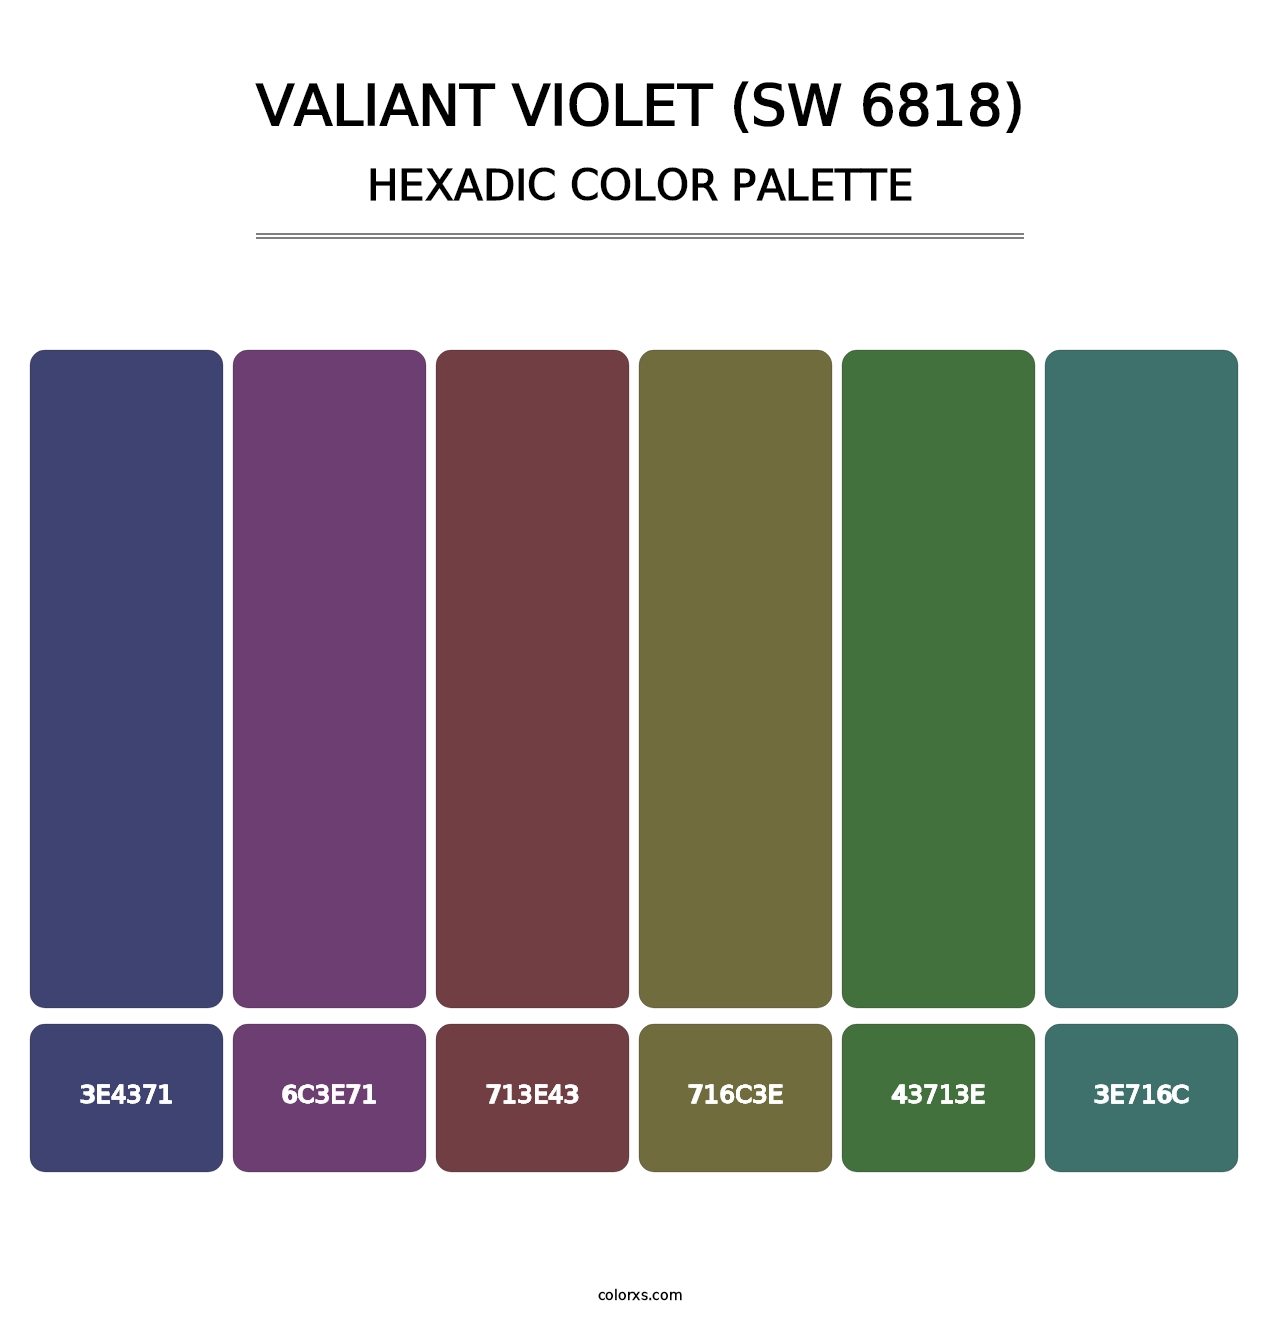 Valiant Violet (SW 6818) - Hexadic Color Palette